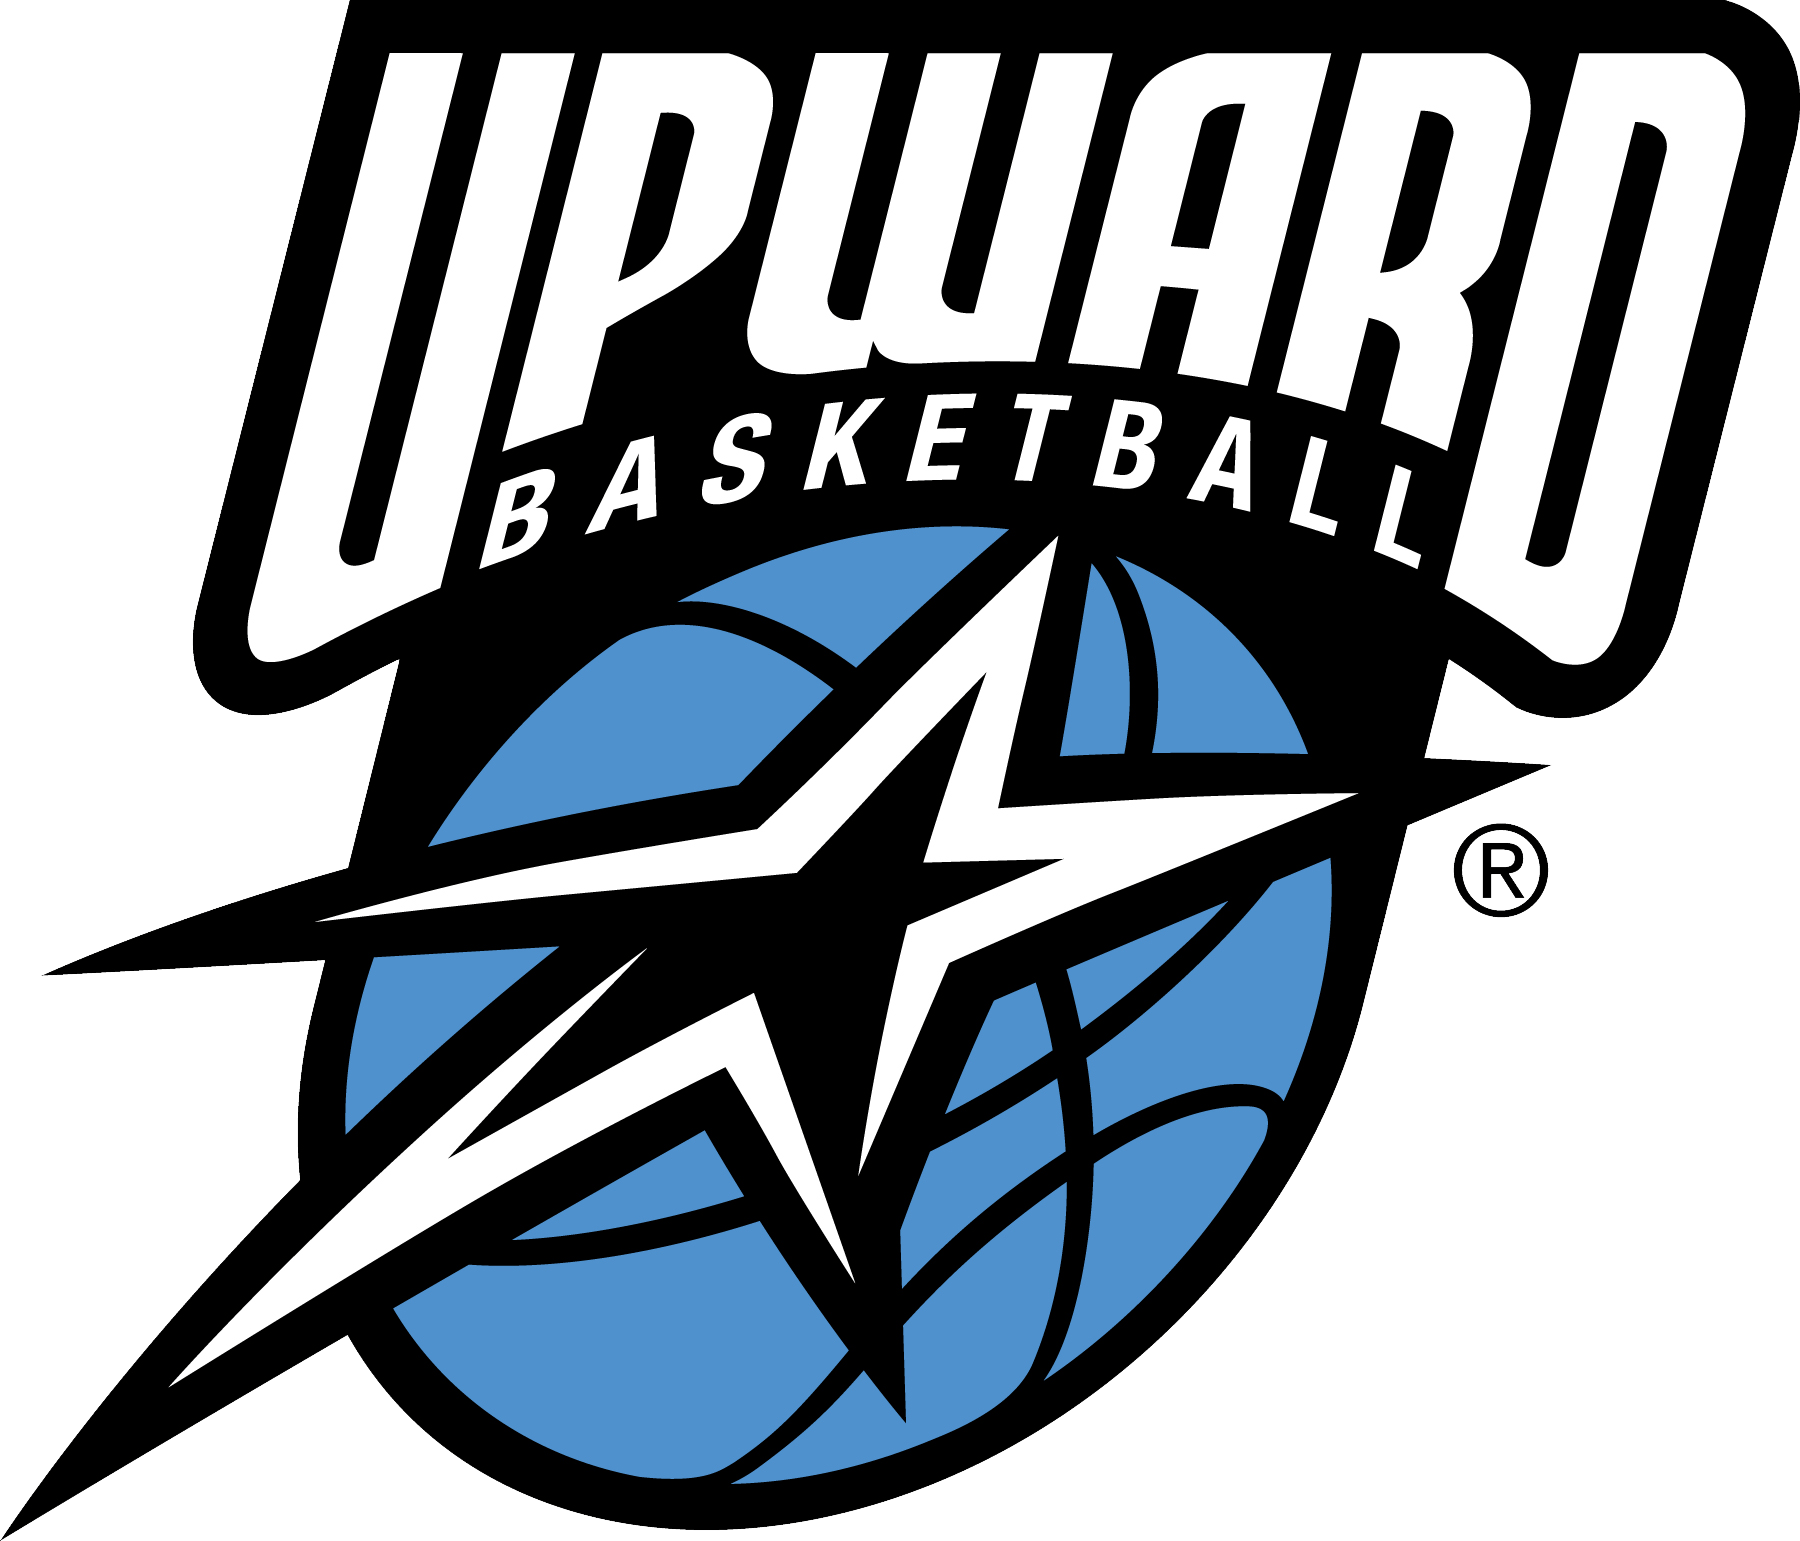 Green and Blue Basketball Logo - Upward